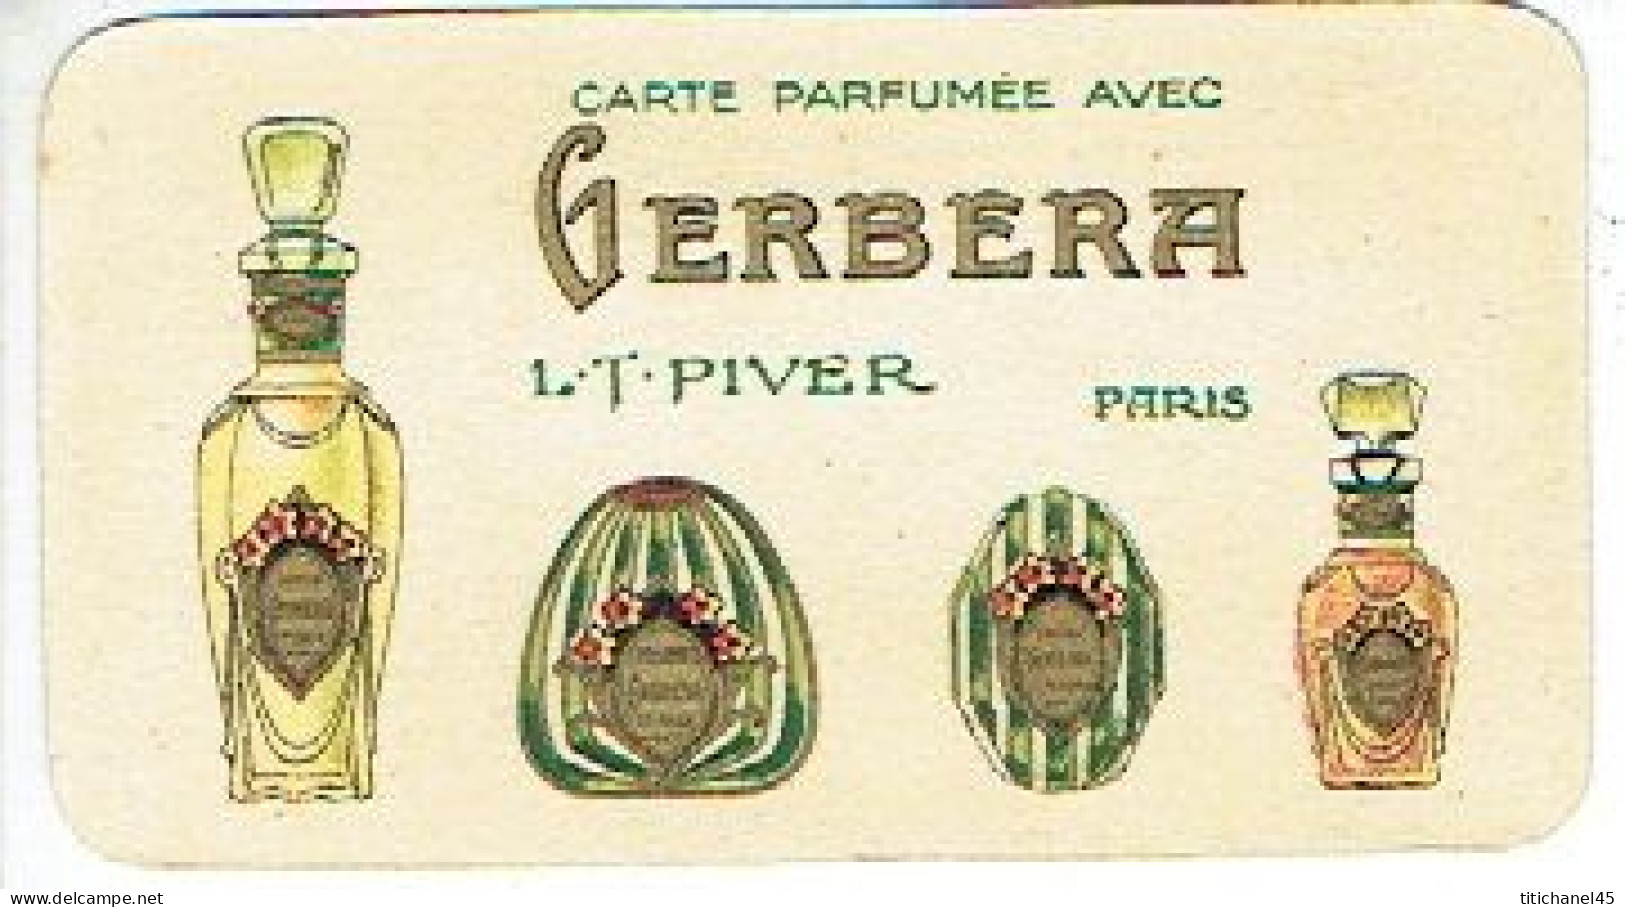 Peu Courante Carte Parfum GERBERA De L.T. PIVER - Calendrier De 1924 Au Verso - Profumeria Antica (fino Al 1960)